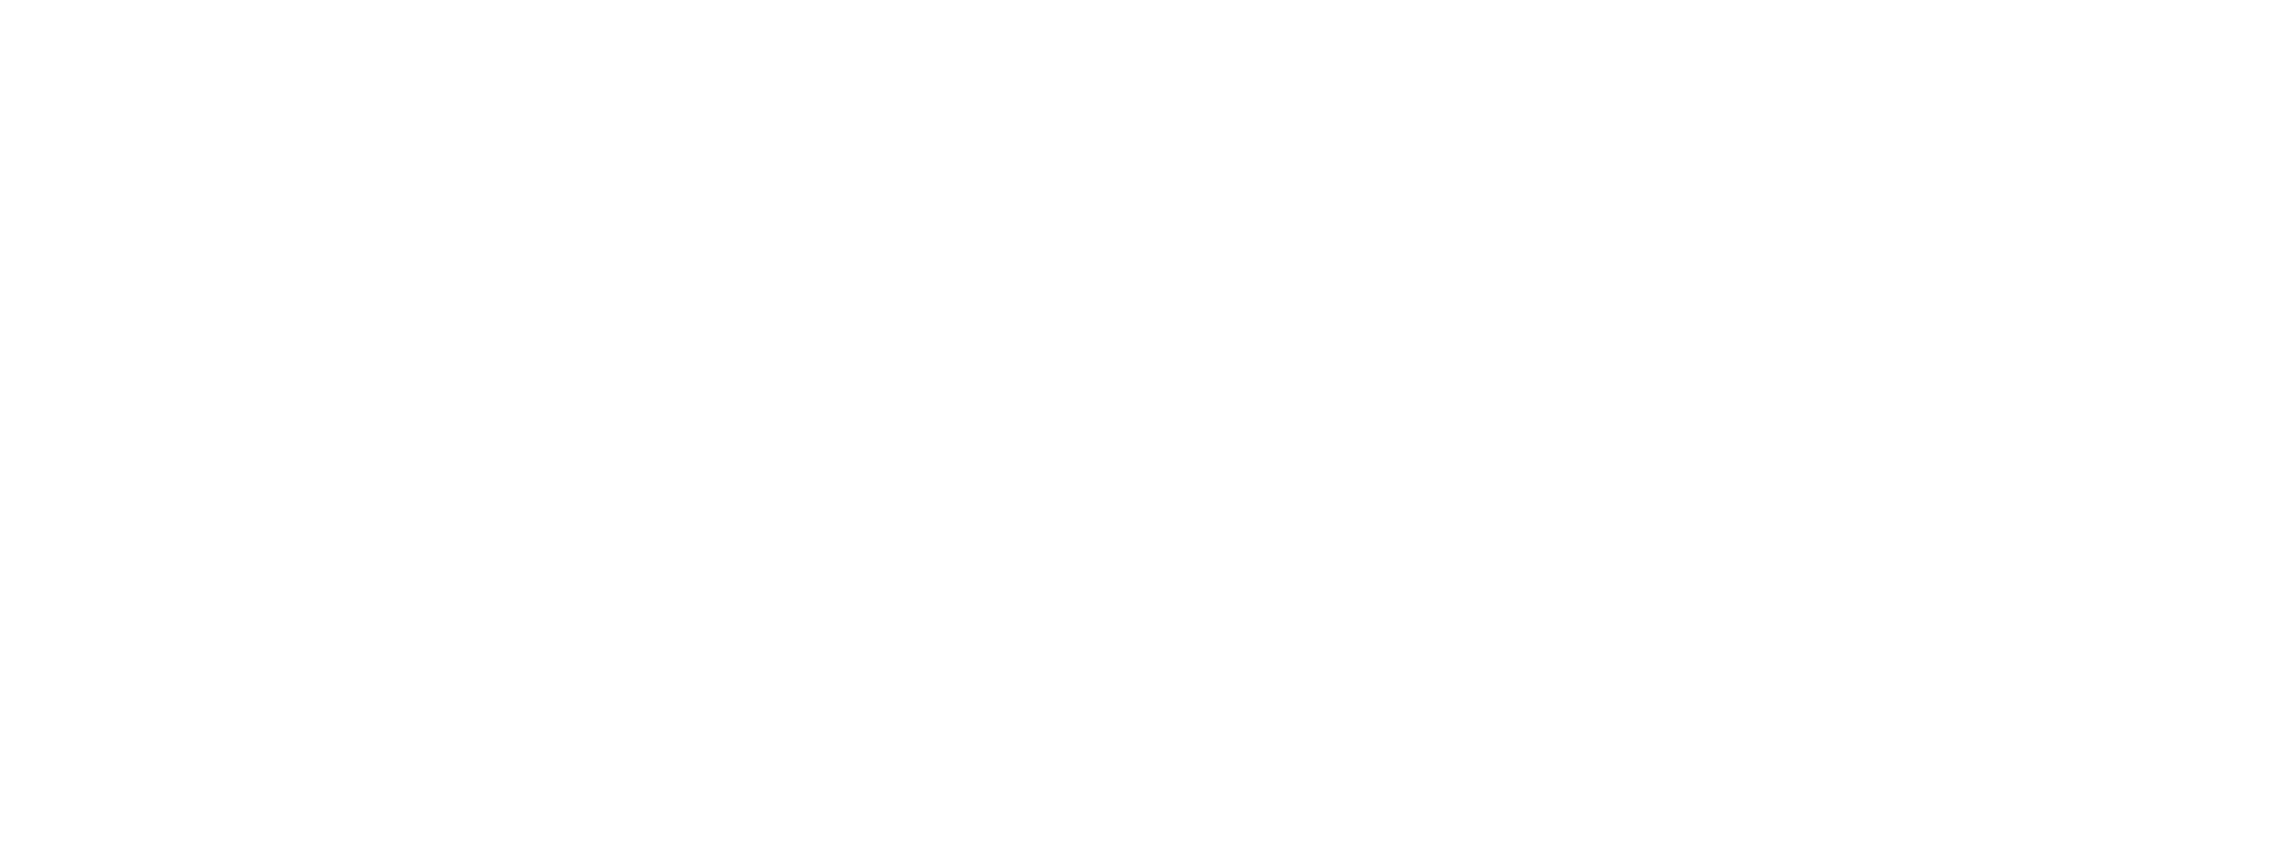 Vital Communities - The Local Crowd